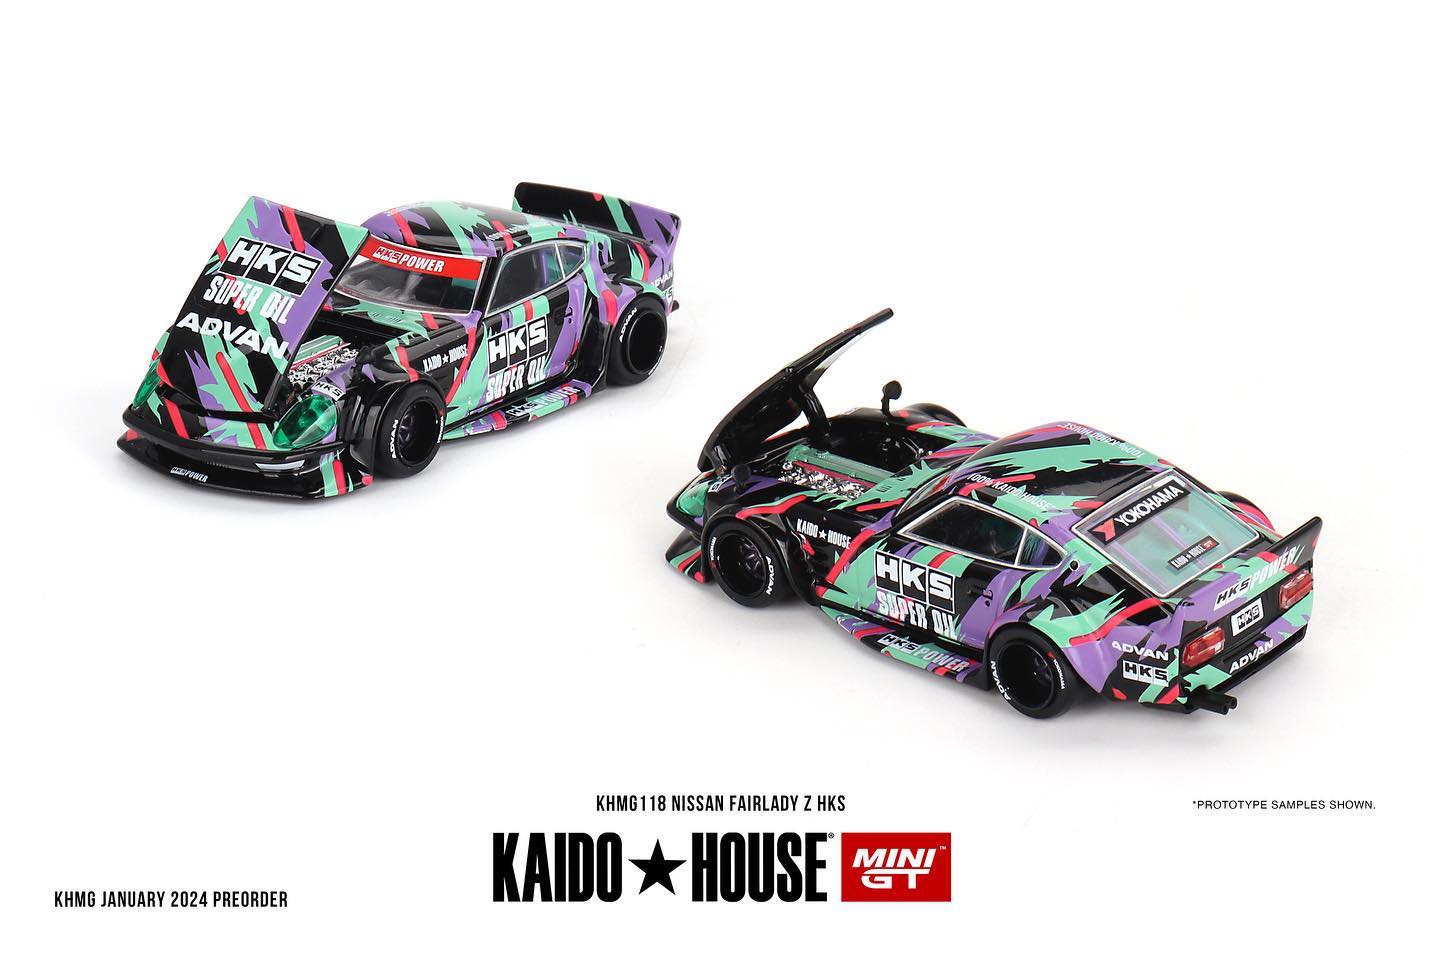 Mini GT x Kaido House Nissan Fairlazy Z HKS